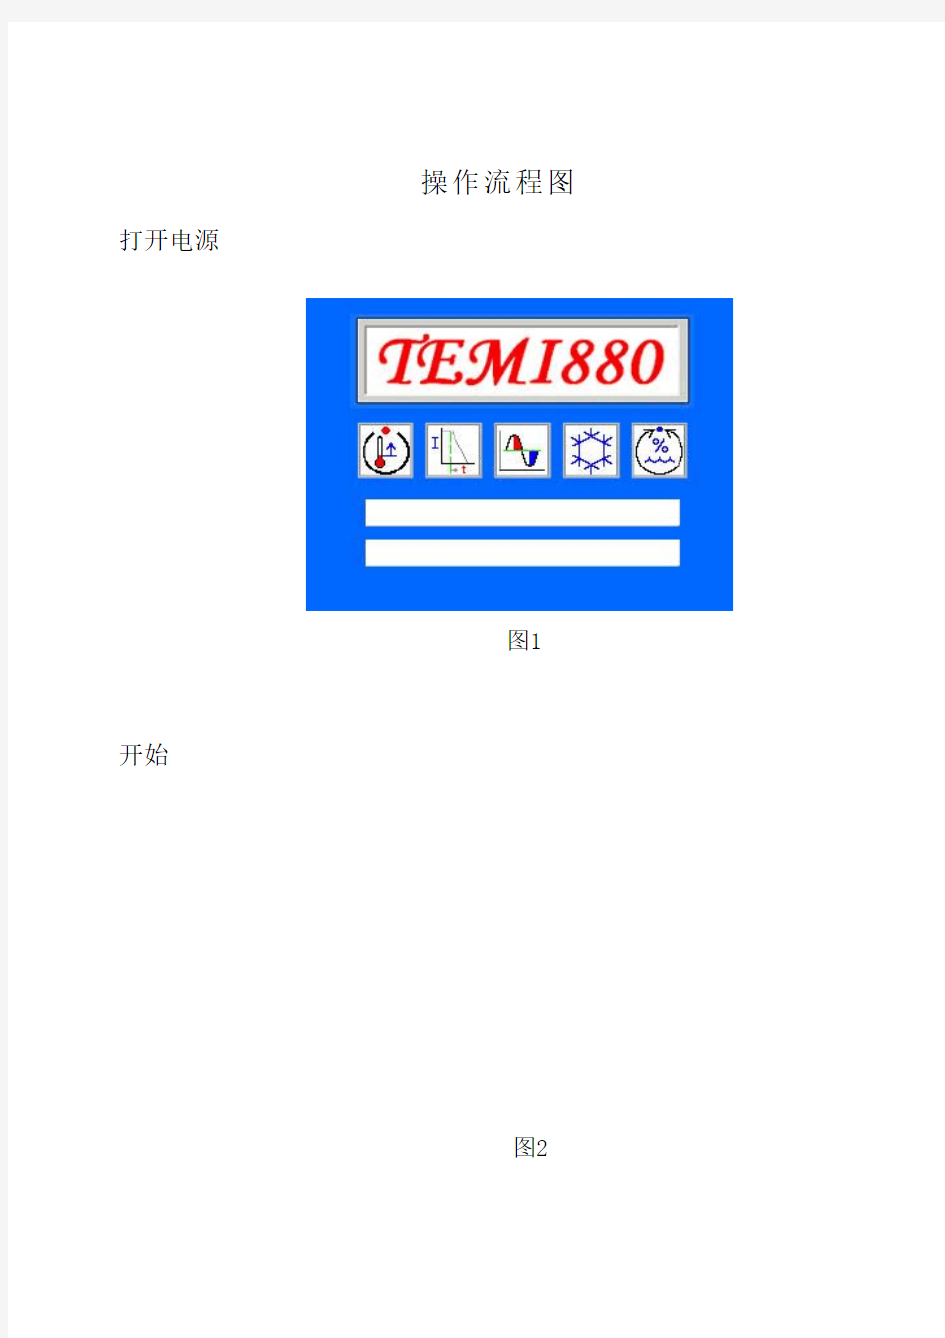 TEMI880中文操作手册